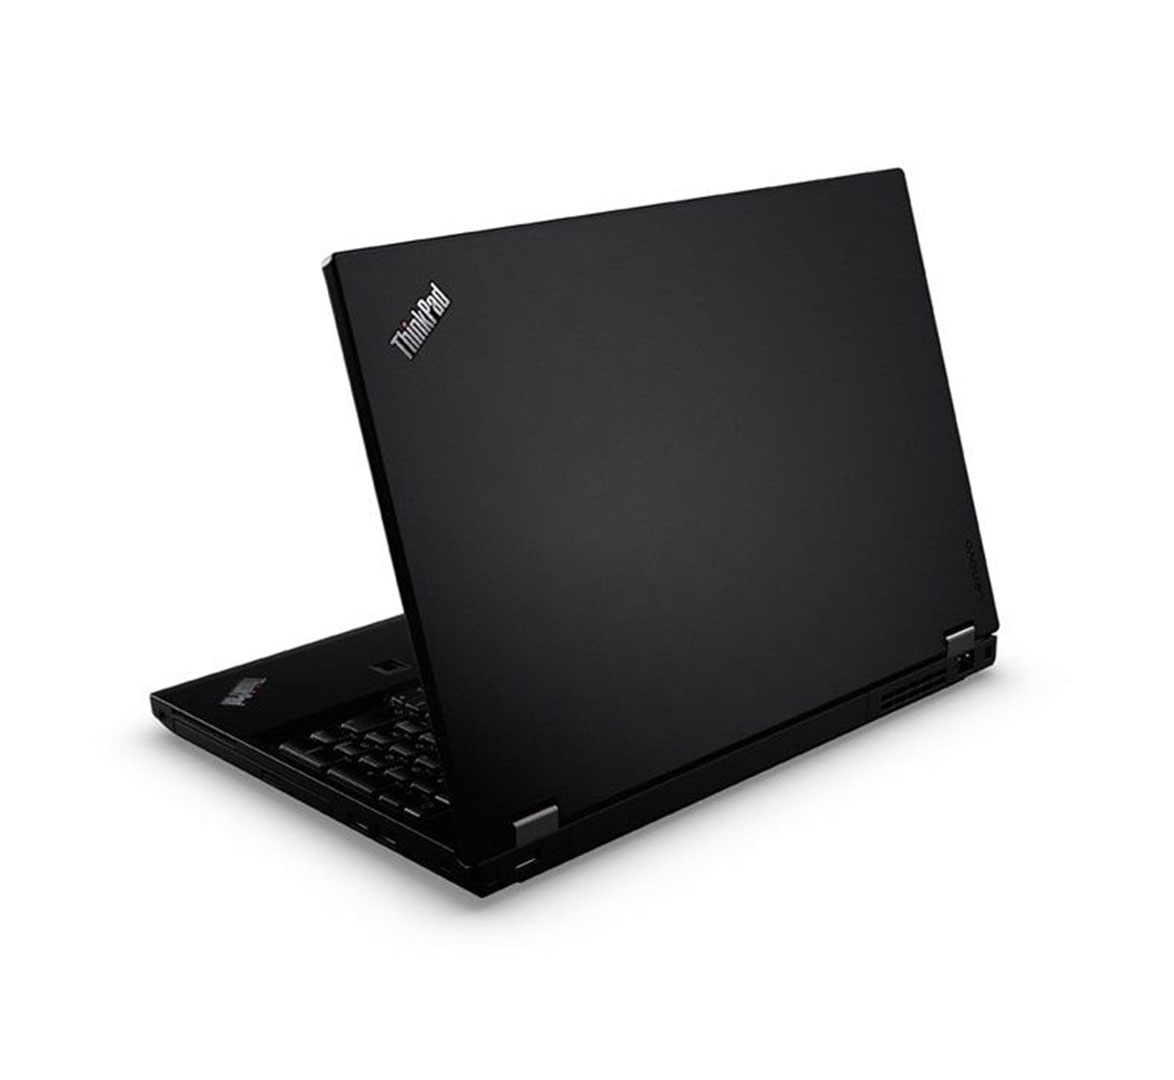 Lenovo ThinkPad L560 Business Laptop, Intel Core i5-6th Generation CPU, 8GB RAM, 256GB SSD, 15 inch Display, Windows 10 Pro